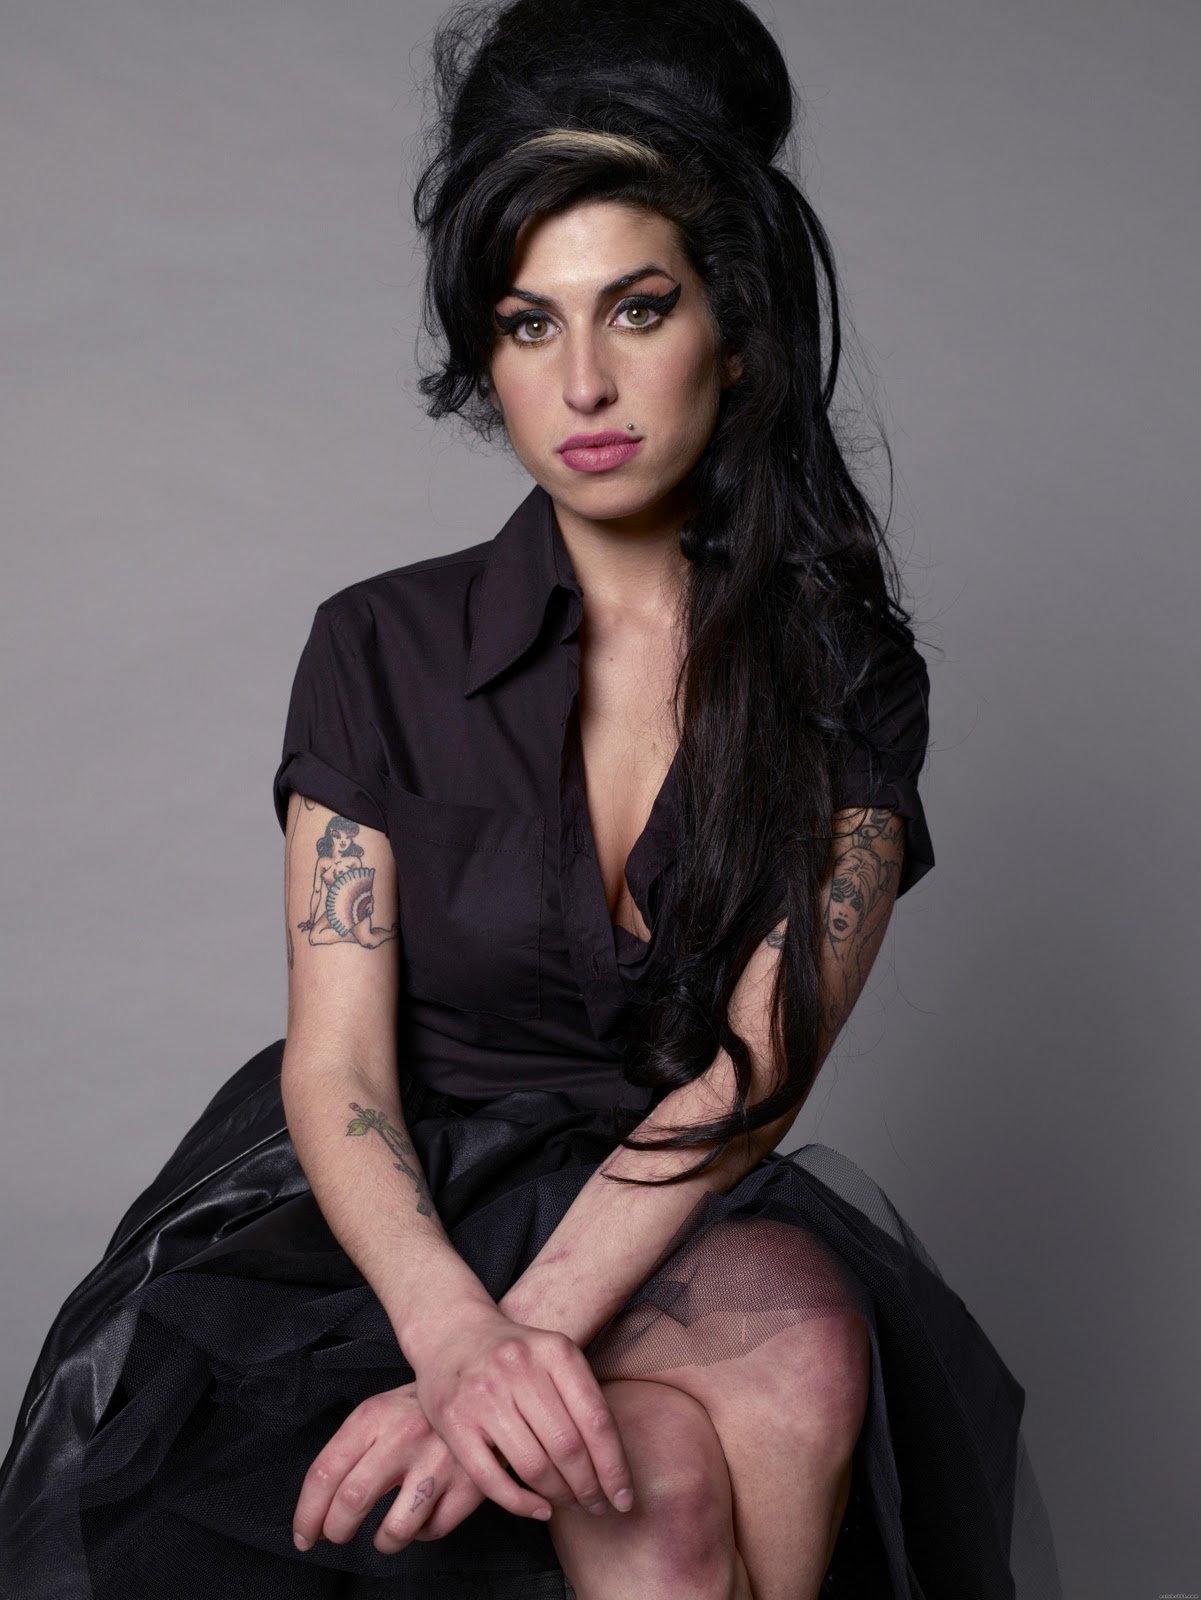 http://1.bp.blogspot.com/-v39yNzH9yQ8/Tzk-eyGzLHI/AAAAAAAACGI/-YkLn0gGu3w/s1600/Amy_Winehouse_4.jpg